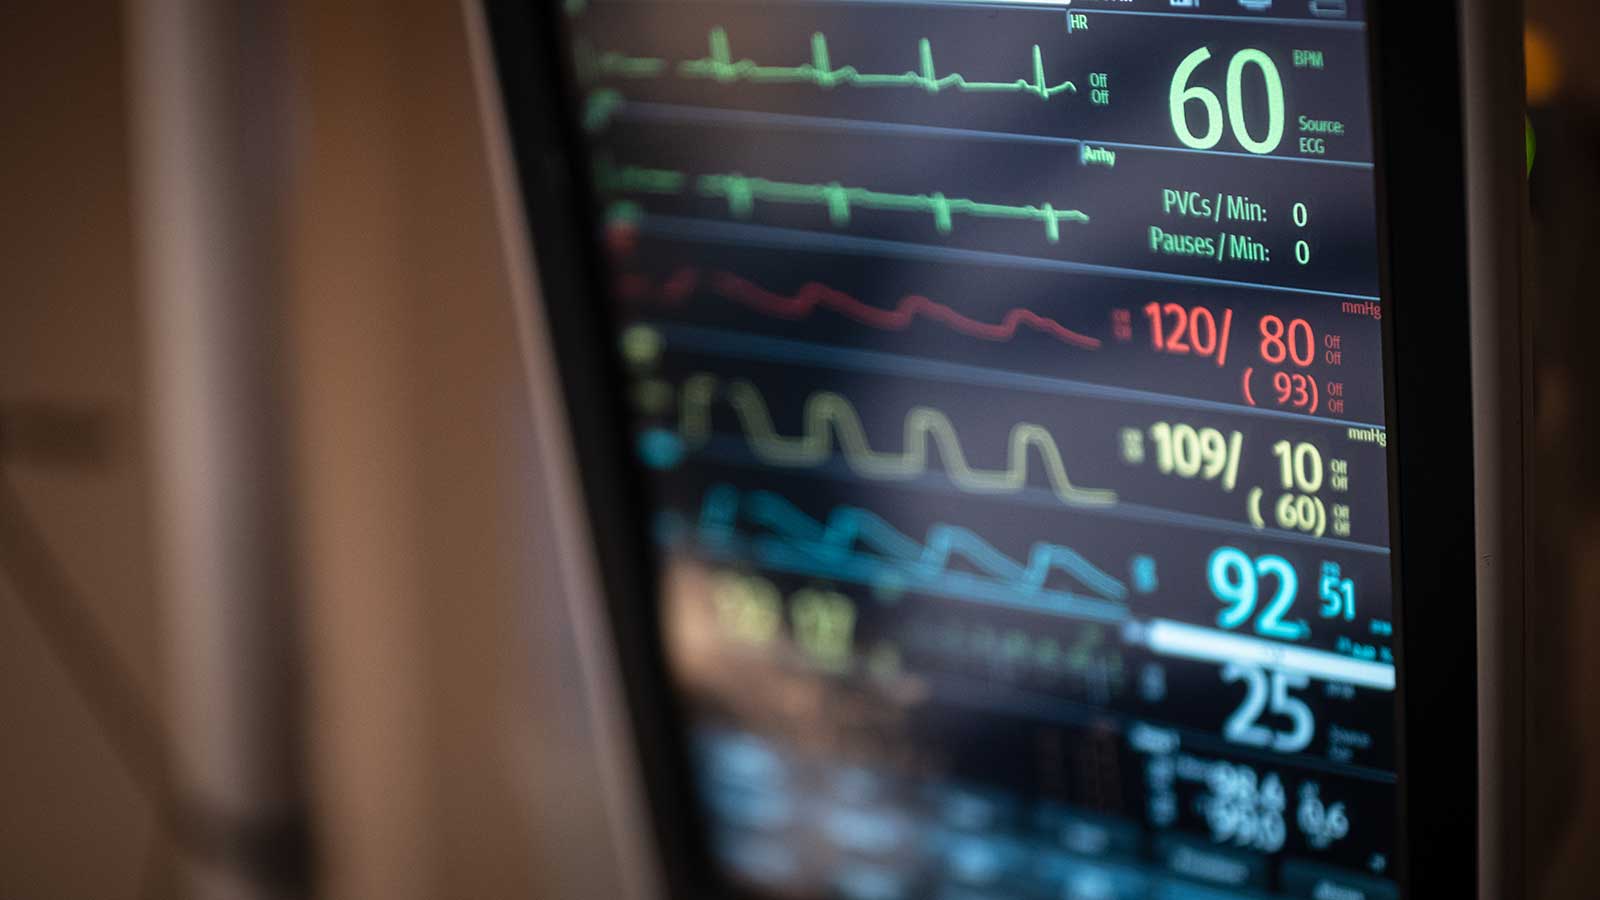 hospital monitor displaying cardiac information